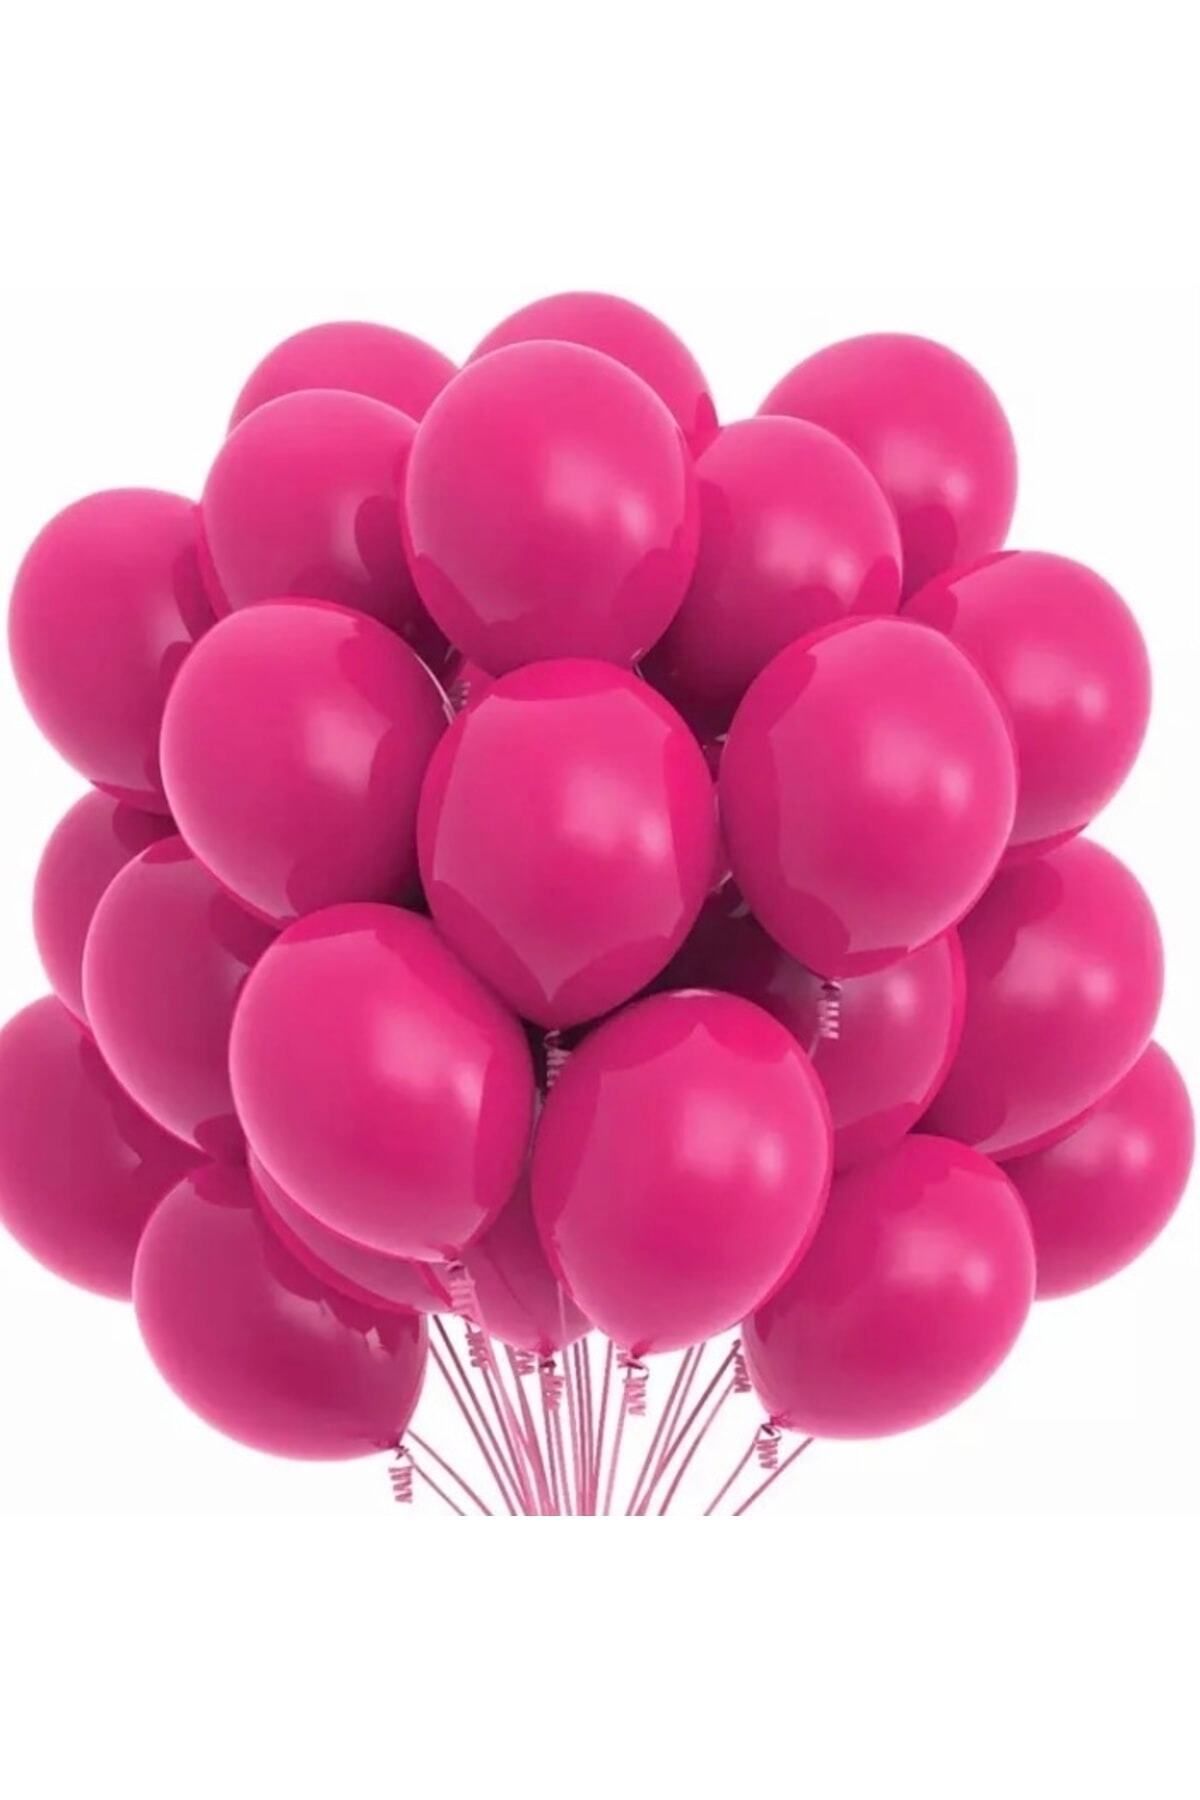 Deniz Party Store Pastel Fuşya Latex Balon 12 Inç 10 Adet